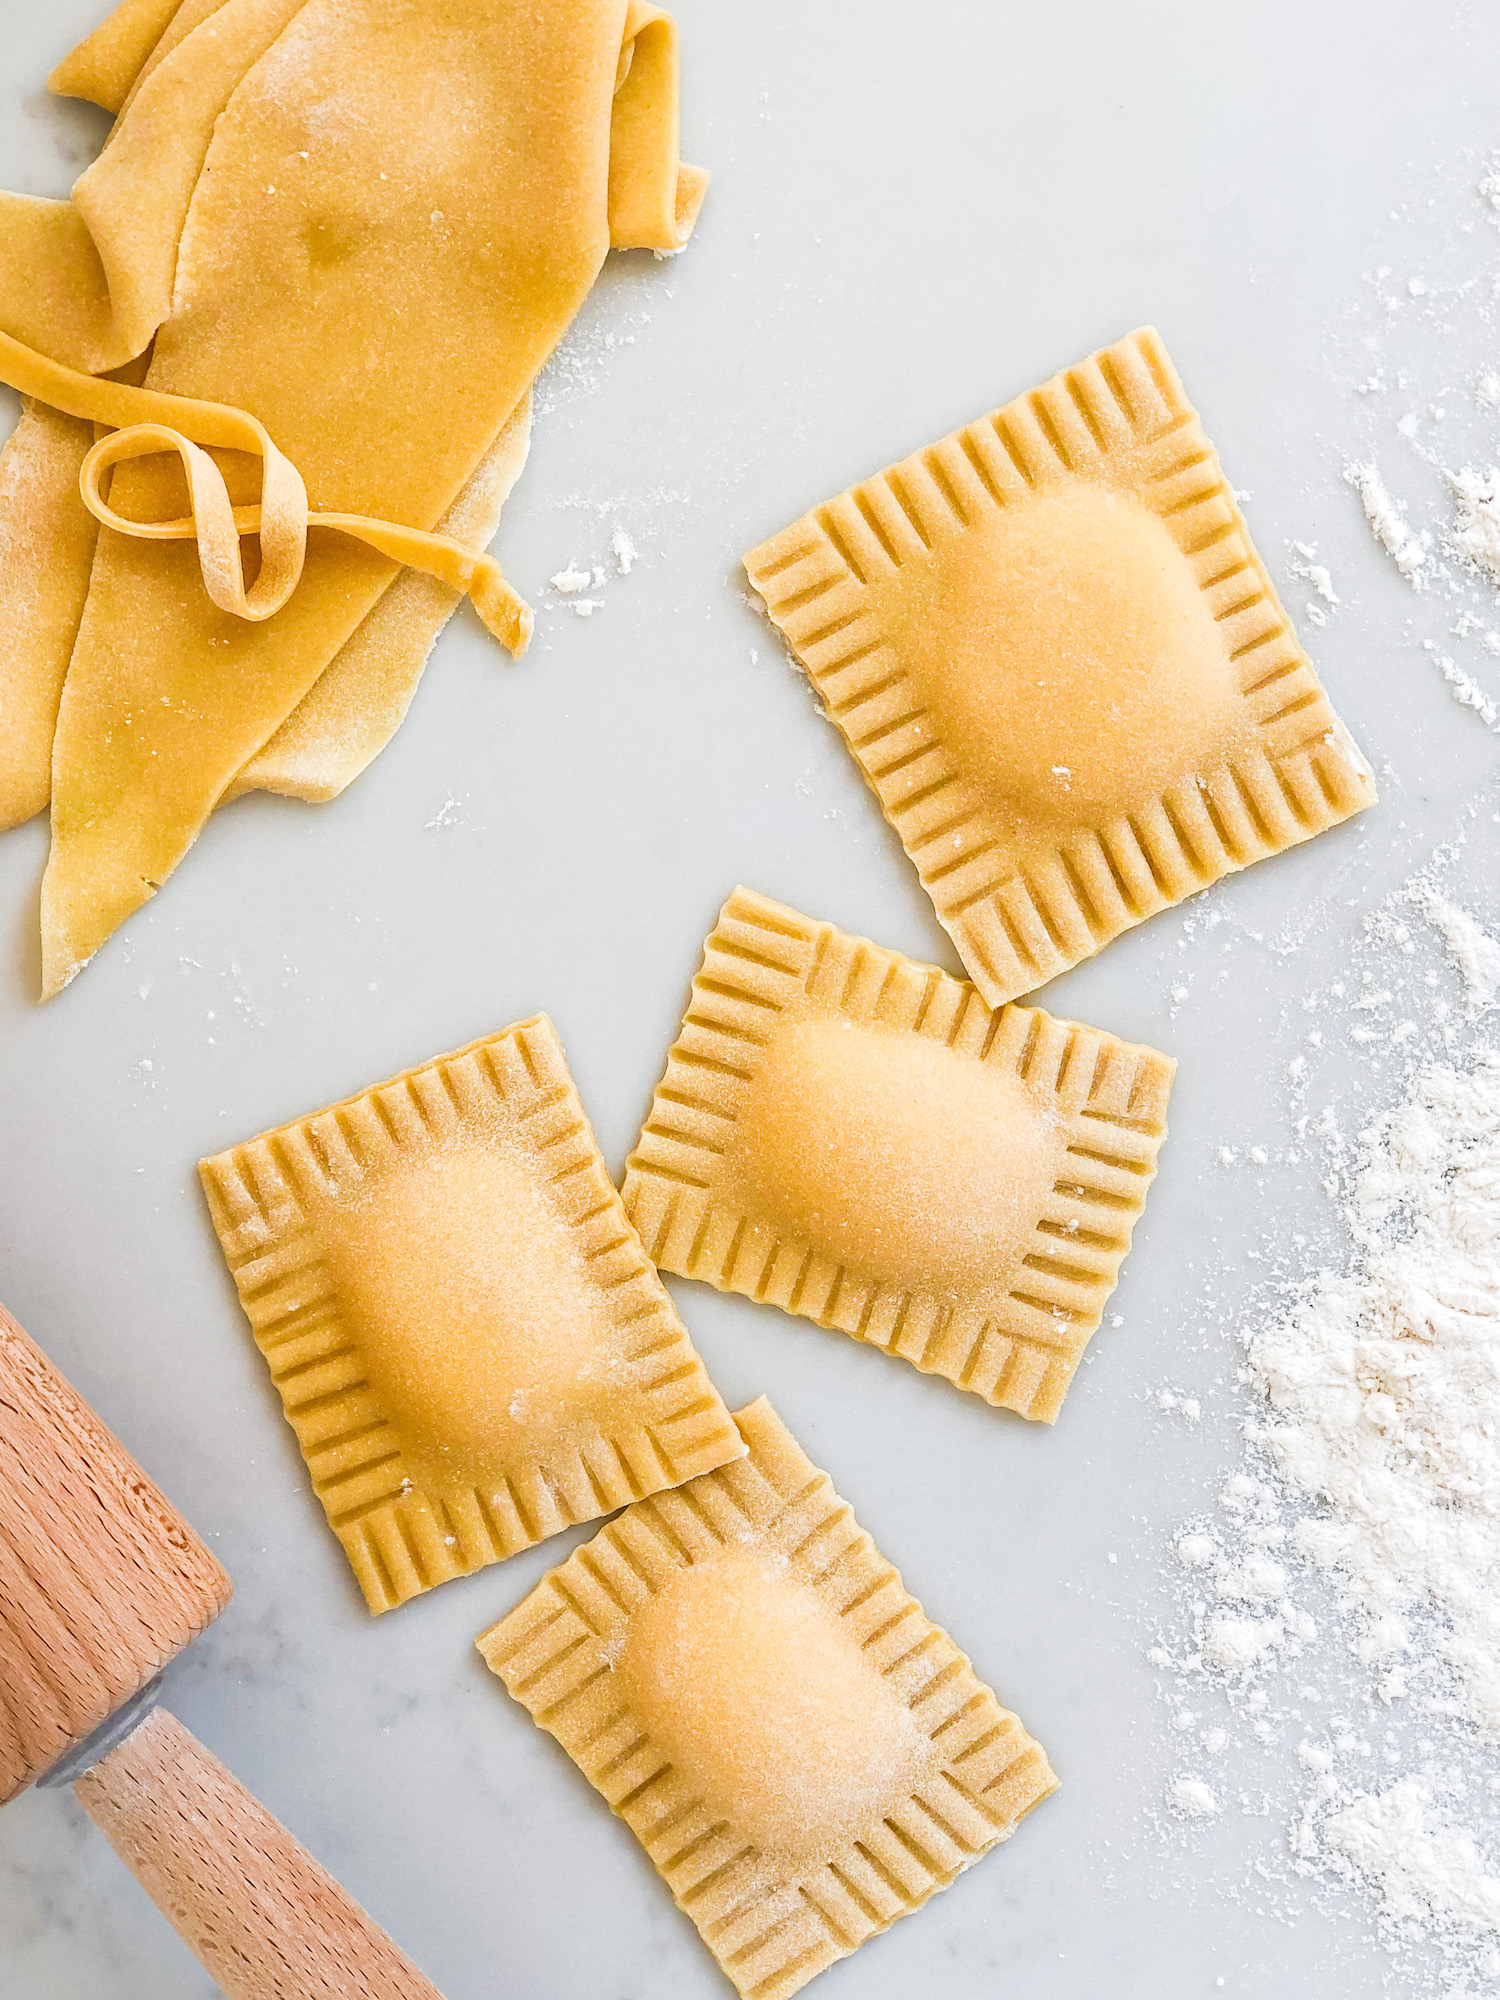 https://fettysfoodblog.com/wp-content/uploads/2018/08/Homemade-Ravioli-Fresh-Pasta-From-Scratch-3.jpg